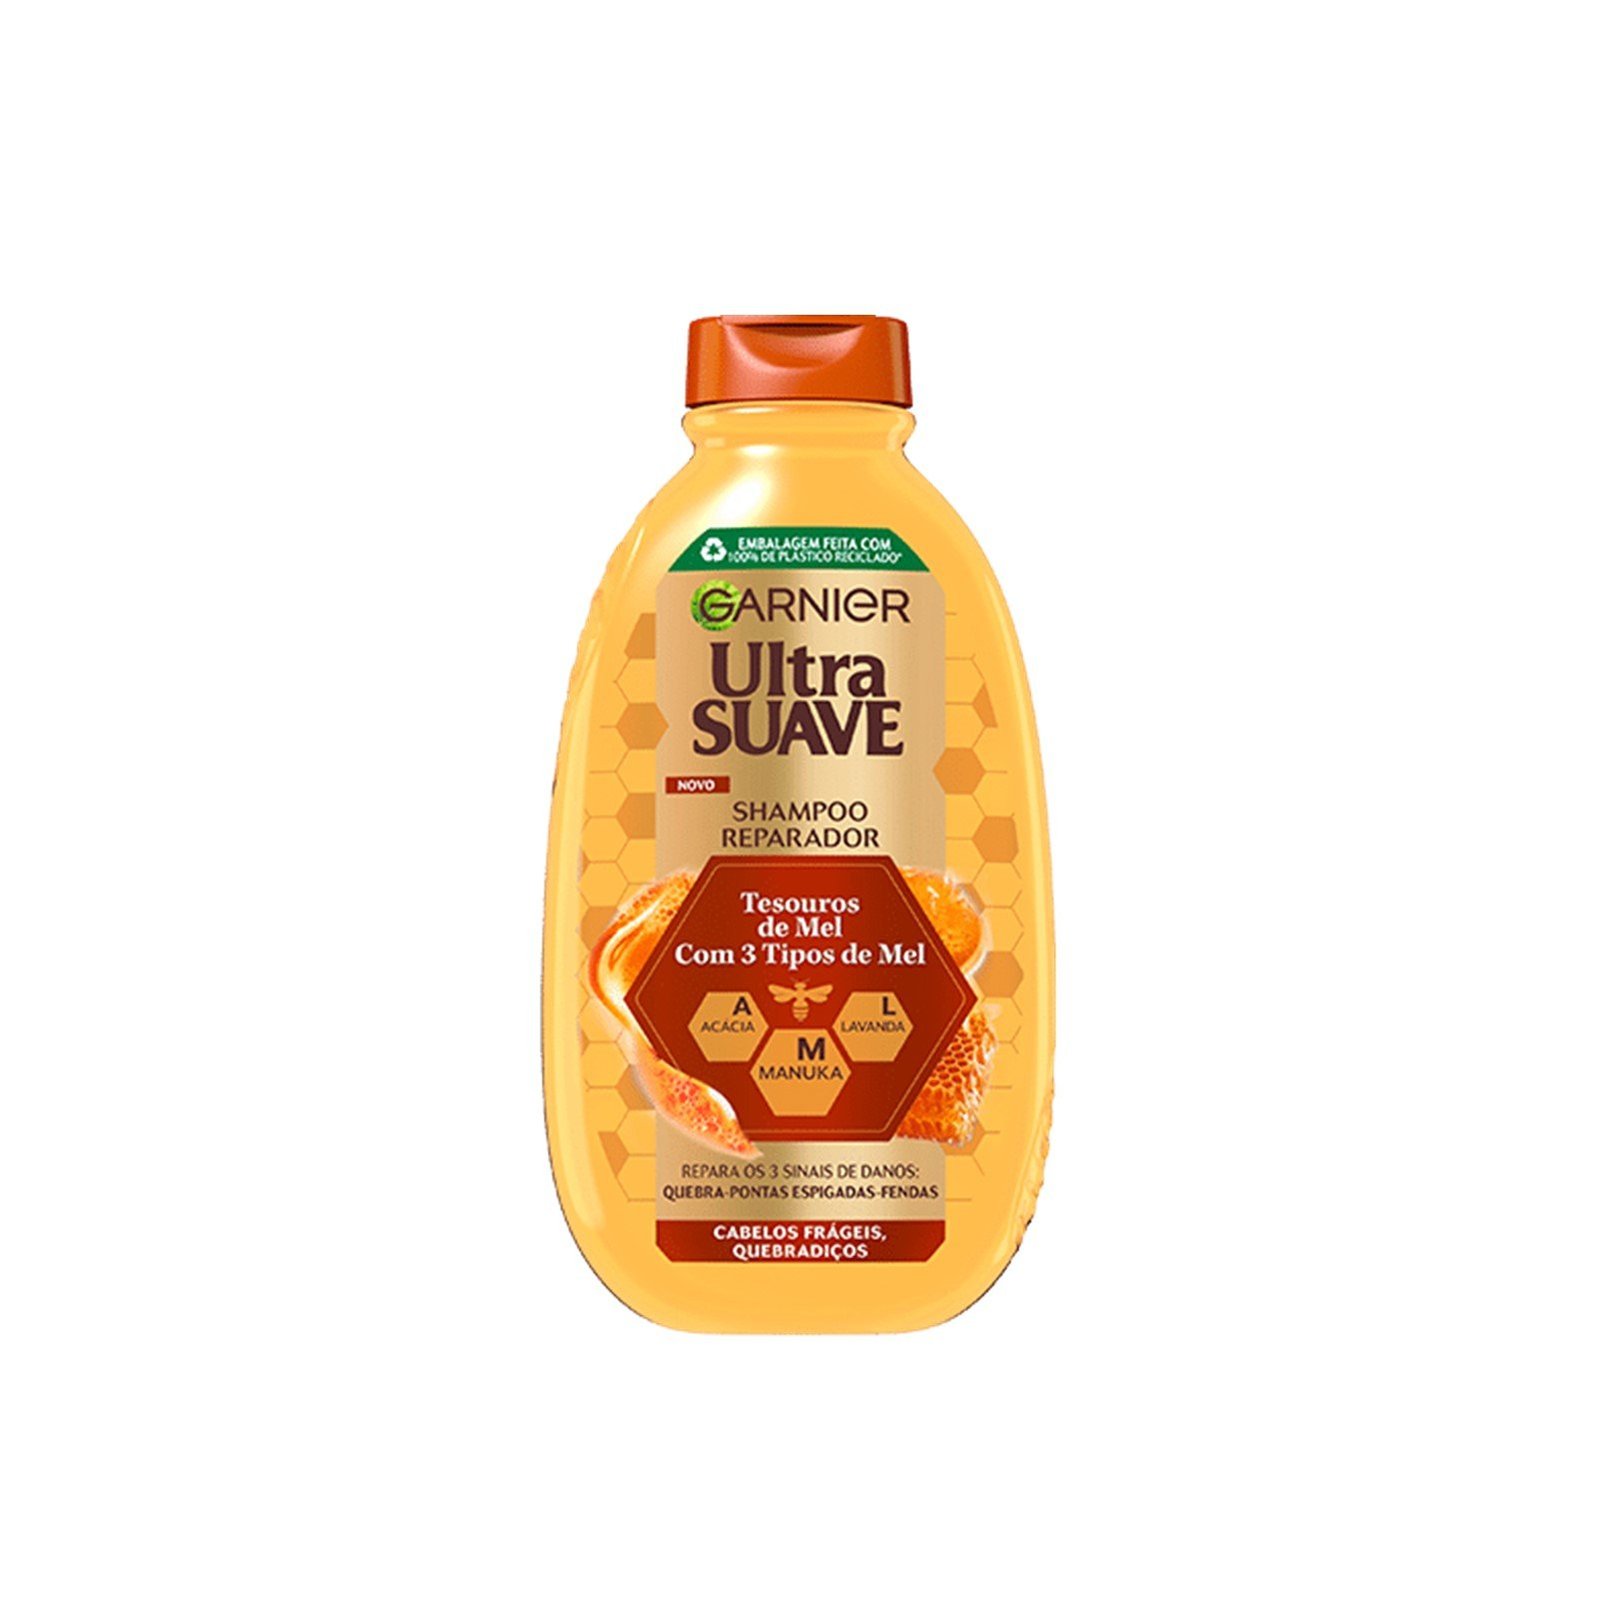 Garnier Ultimate Blends Honey Treasures Shampoo 250ml